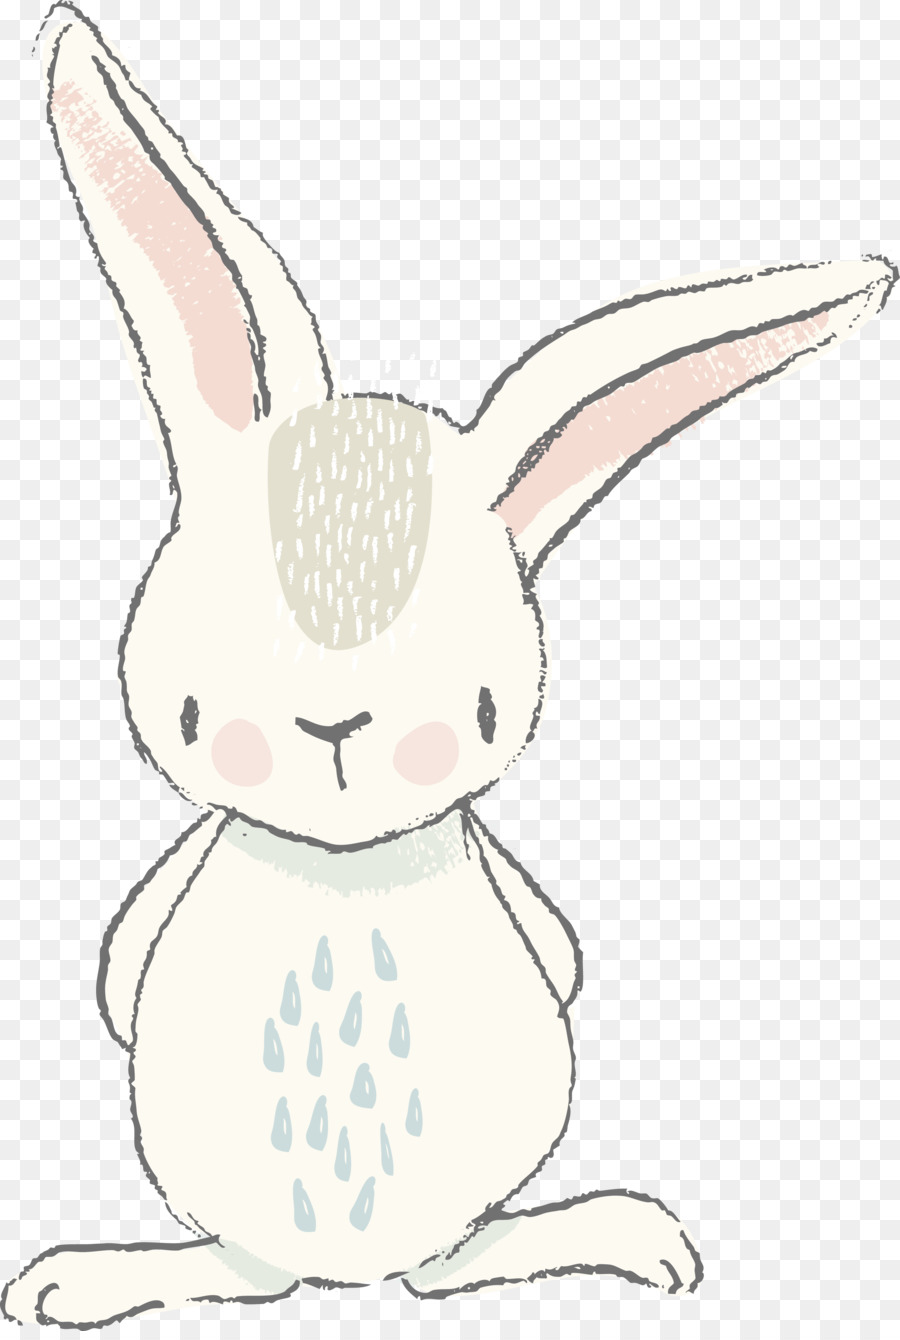 printable bunny Easter bunny clipart Watercolor bunny clip art cute bunny clipart watercolor bunny clipart bunny illustration